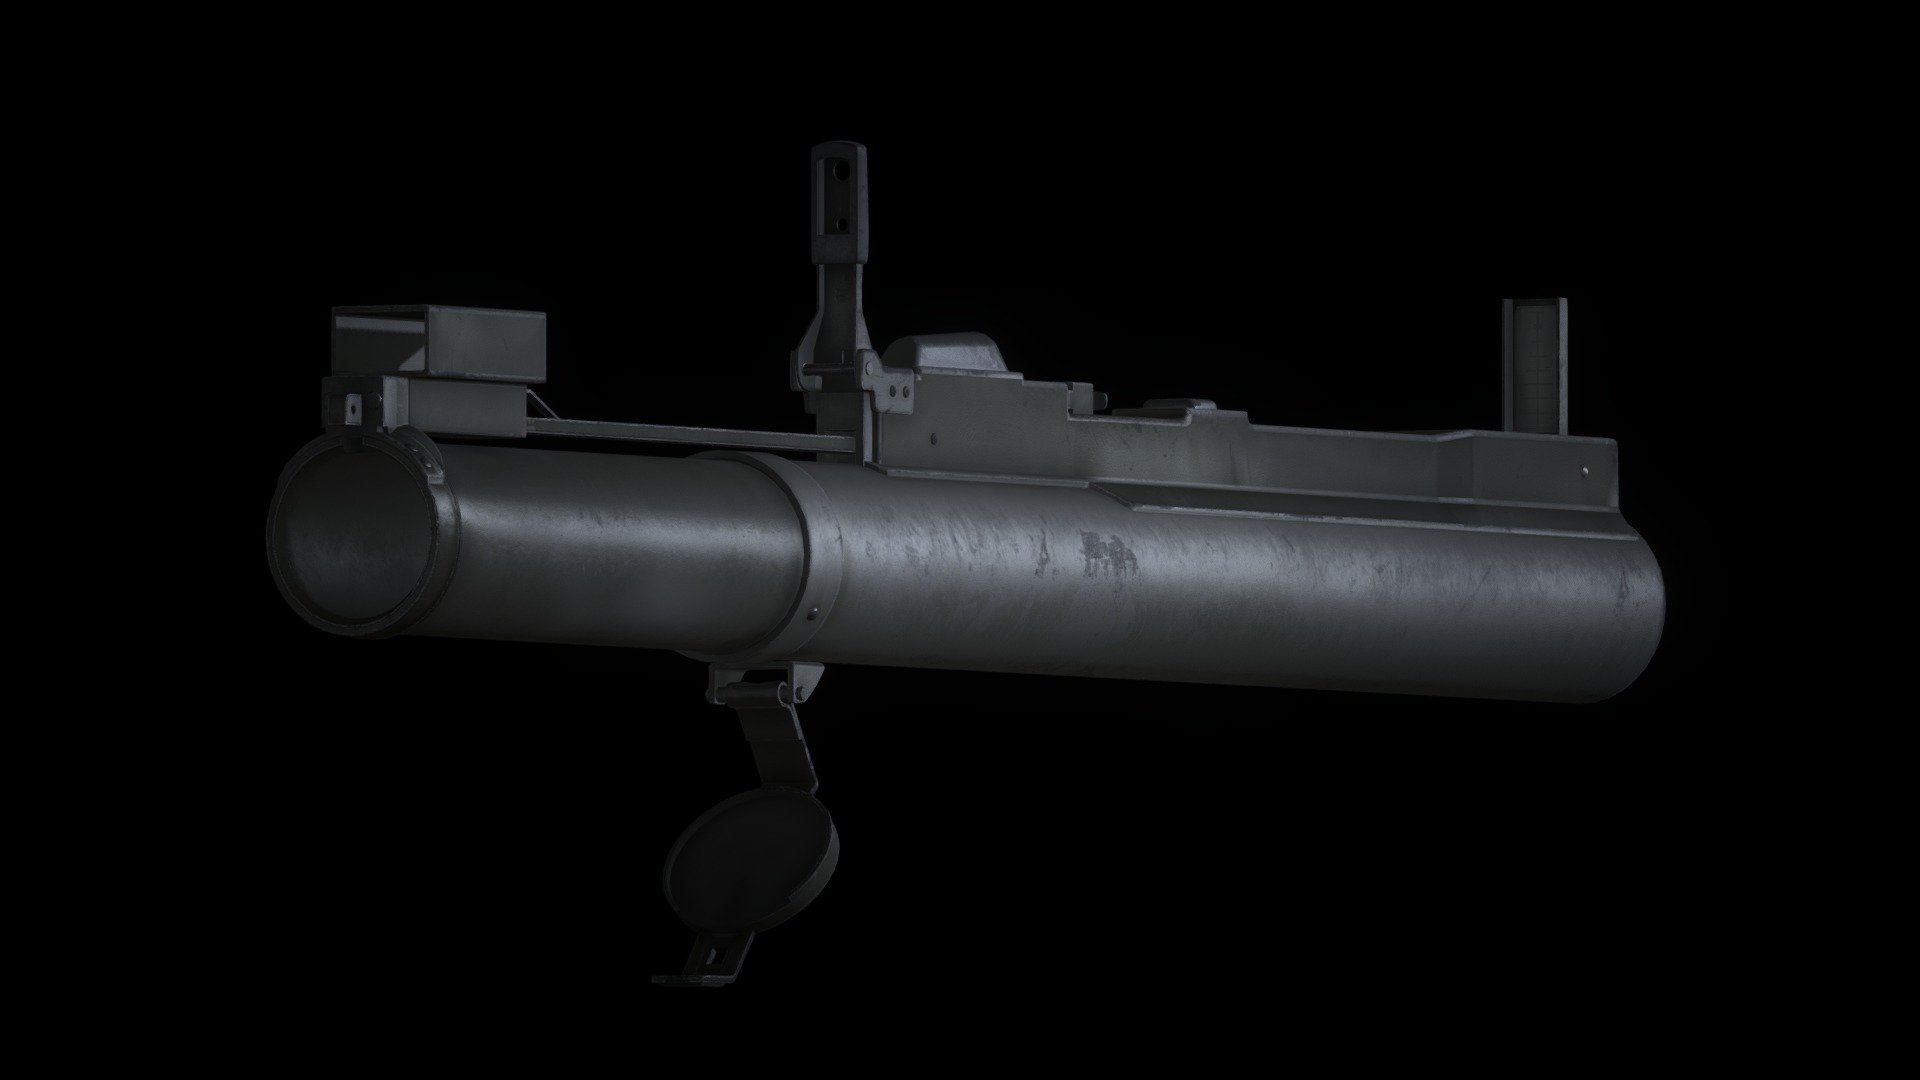 M72 LAW - LAW - 3D model by Shadow (@roma.sayapin06) 3d model